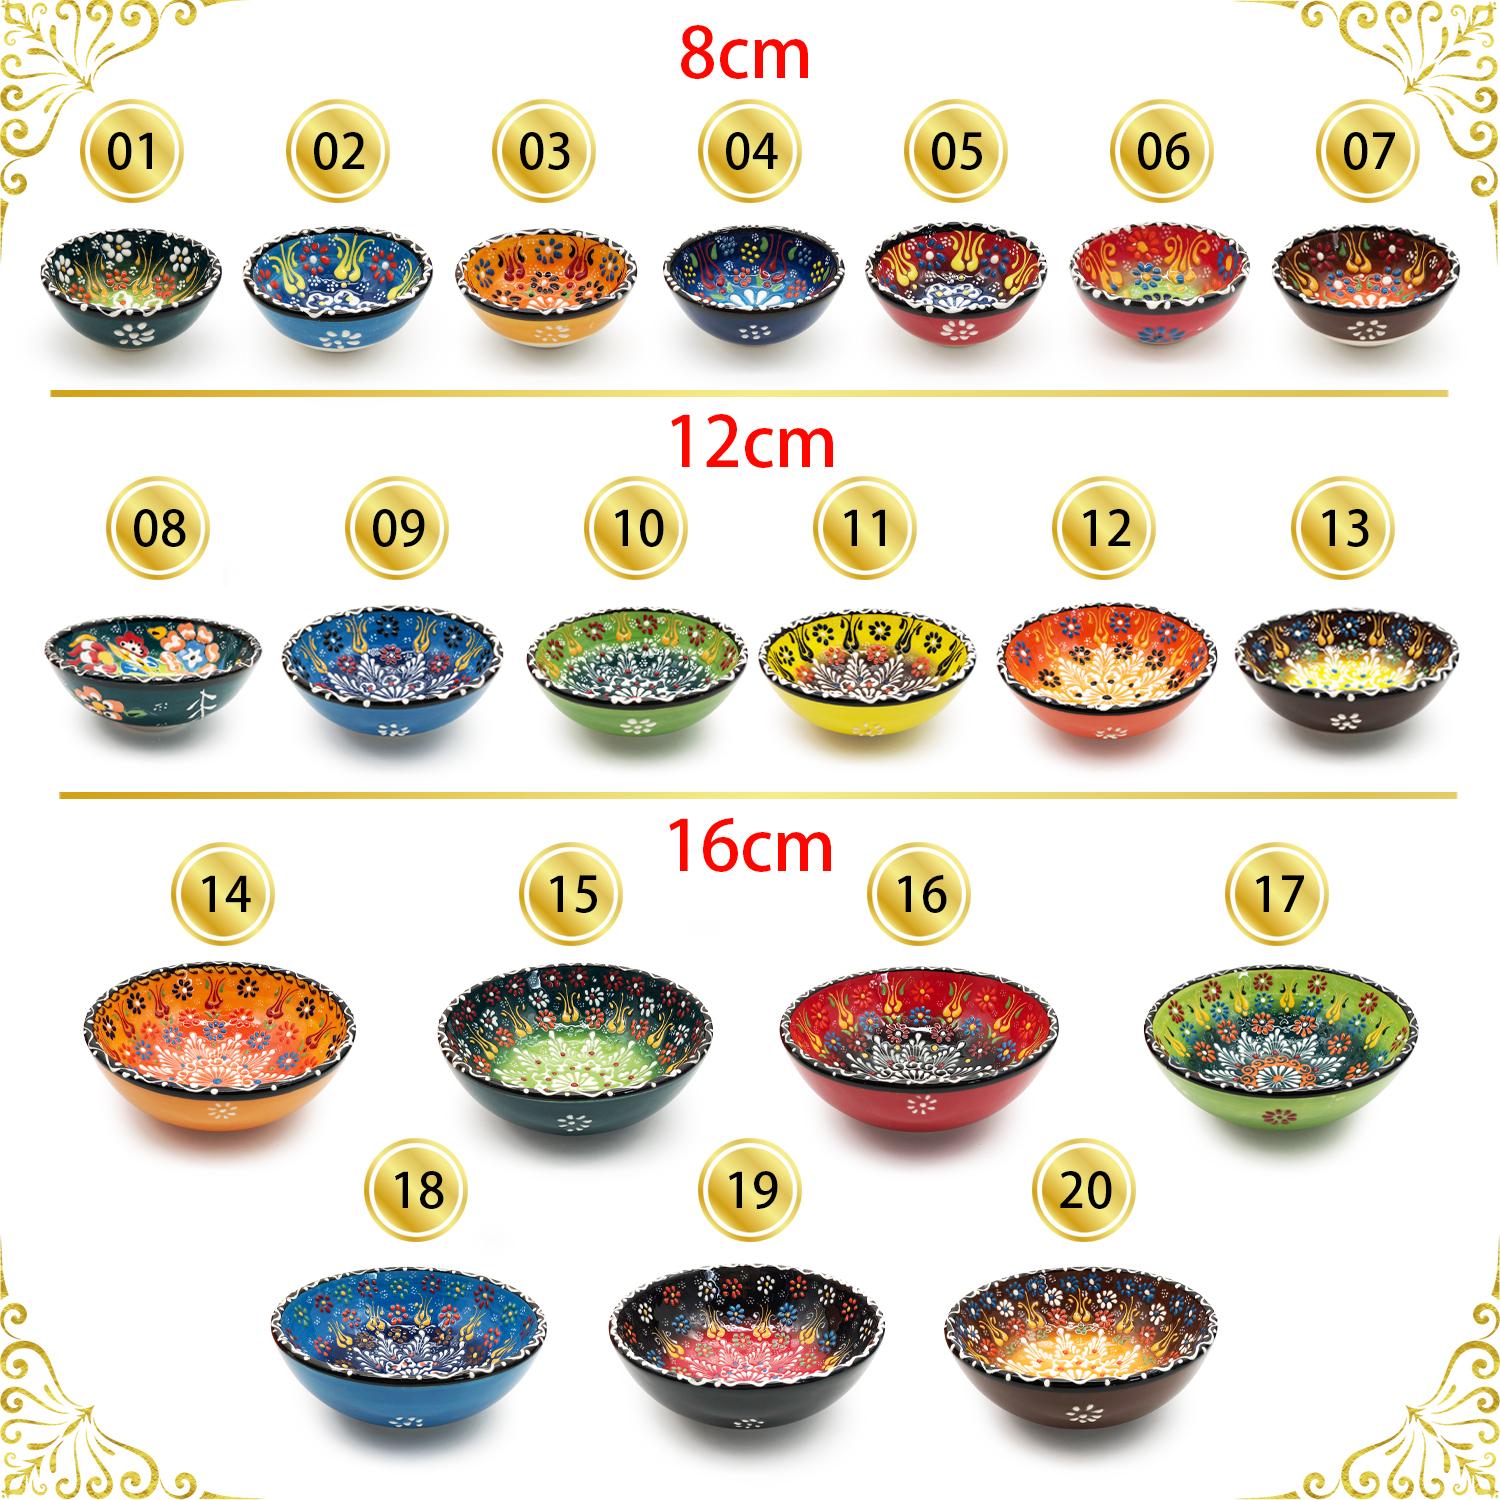 120MM手繪土耳其傳統工藝陶瓷碗， 土耳其餐具奧斯曼帝國浮雕圖案土耳其藝術時尚潮物(VTR-CERAMIC-BOWL-120MM-30105)